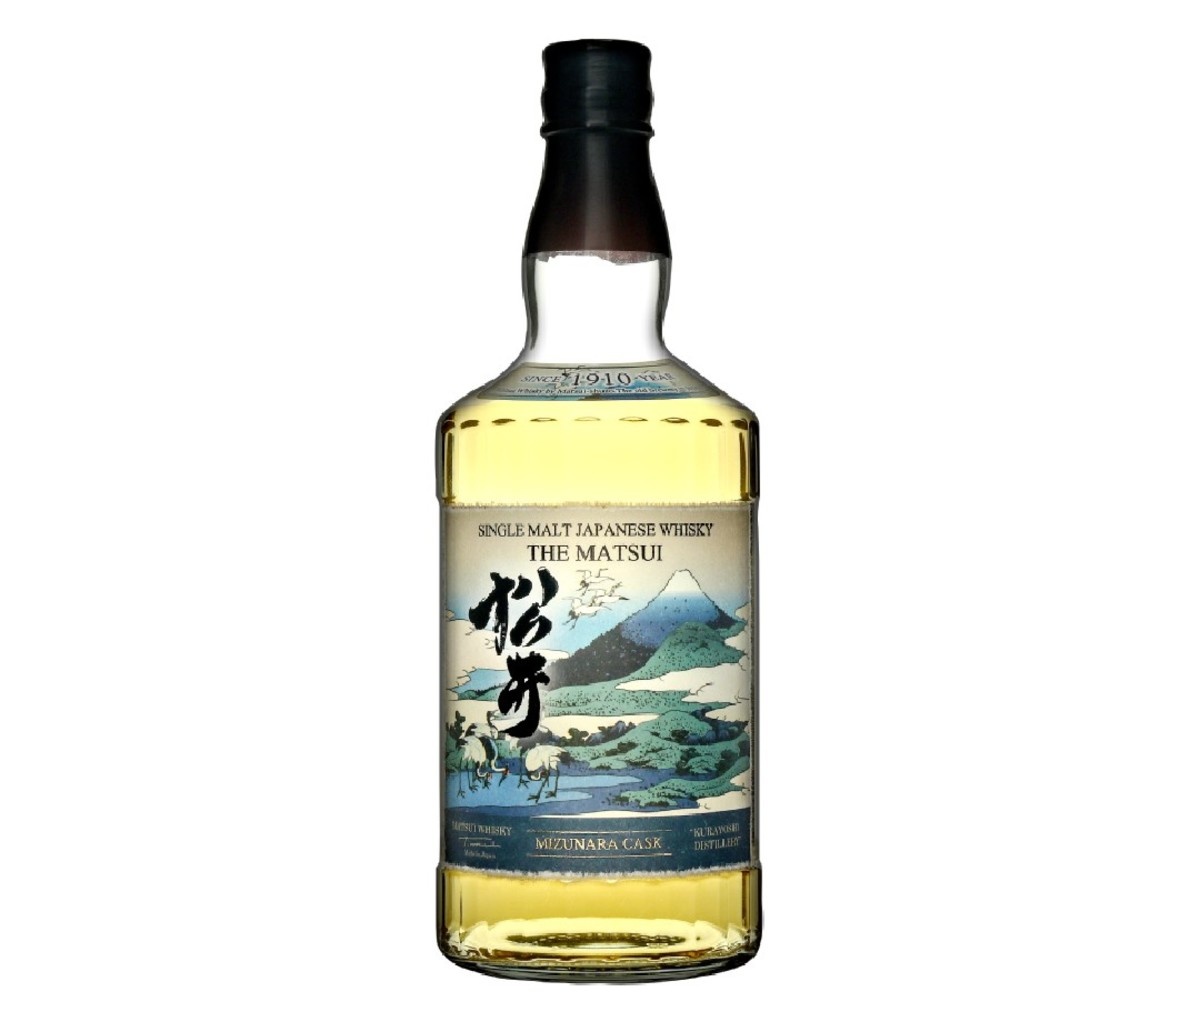 Bottle of Matsui Mizunara Cask Japanese whisky